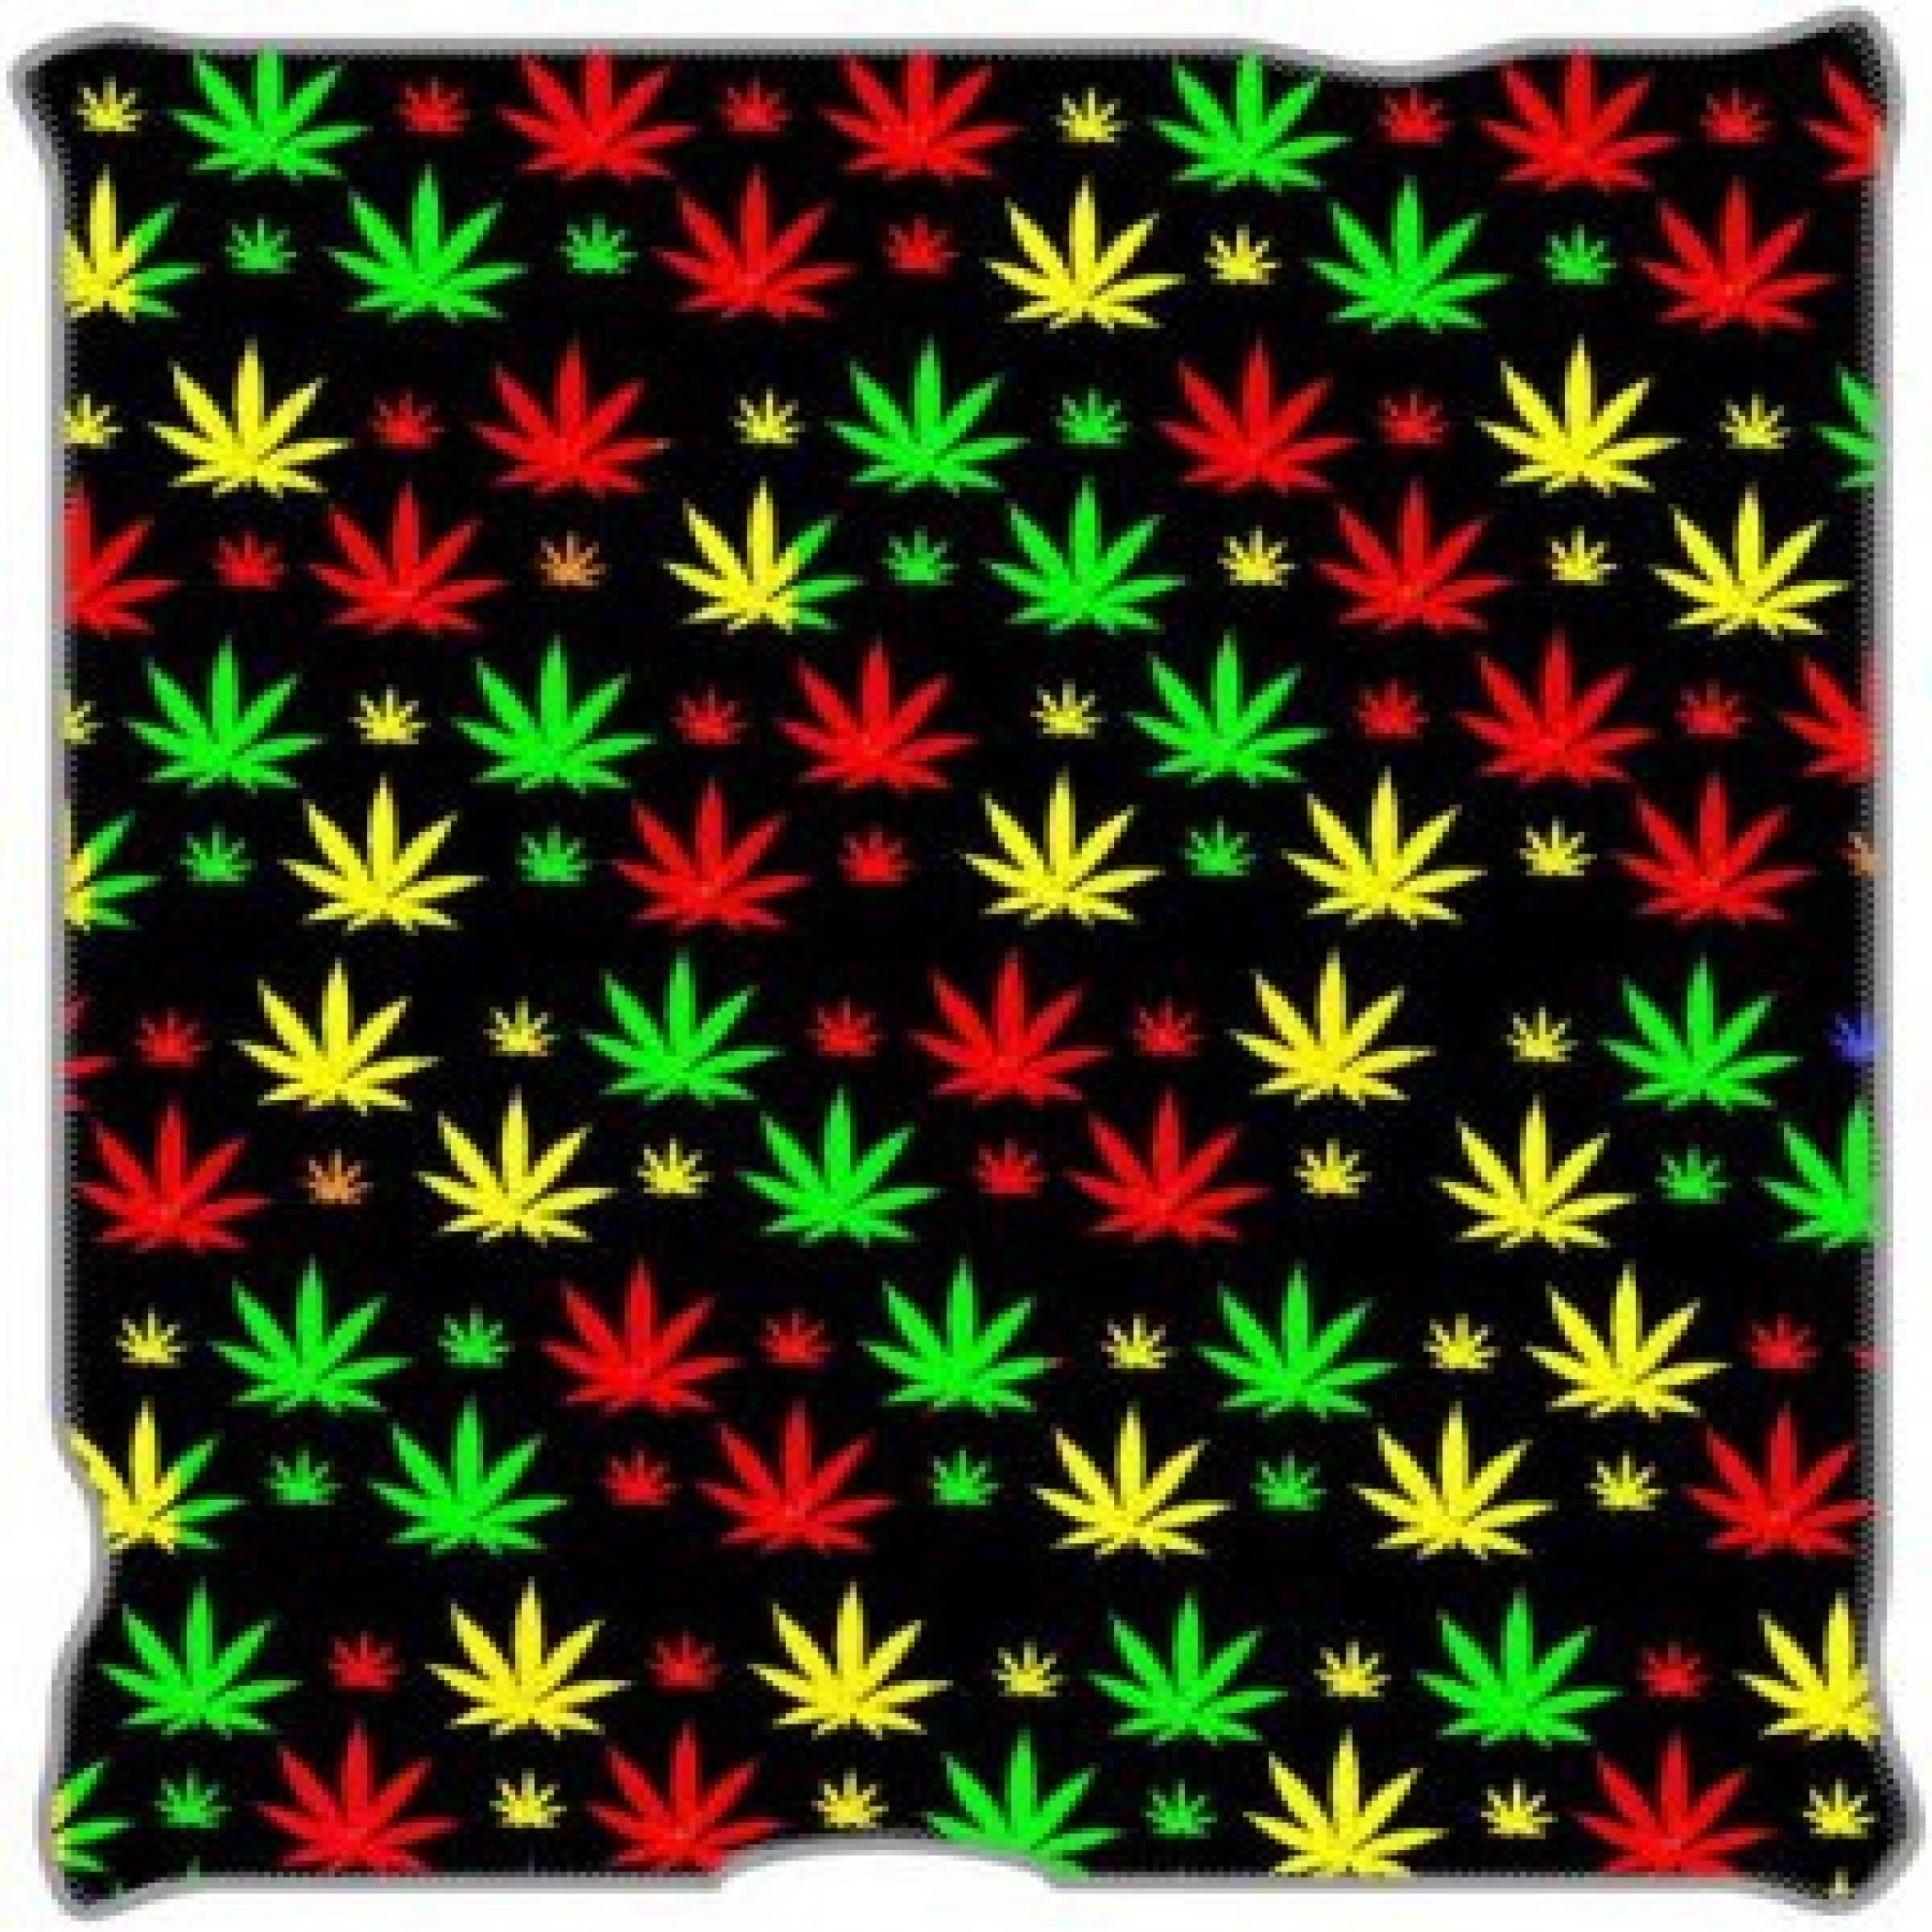 Weed Iphone Wallpaper Marijuana wallpapers hd